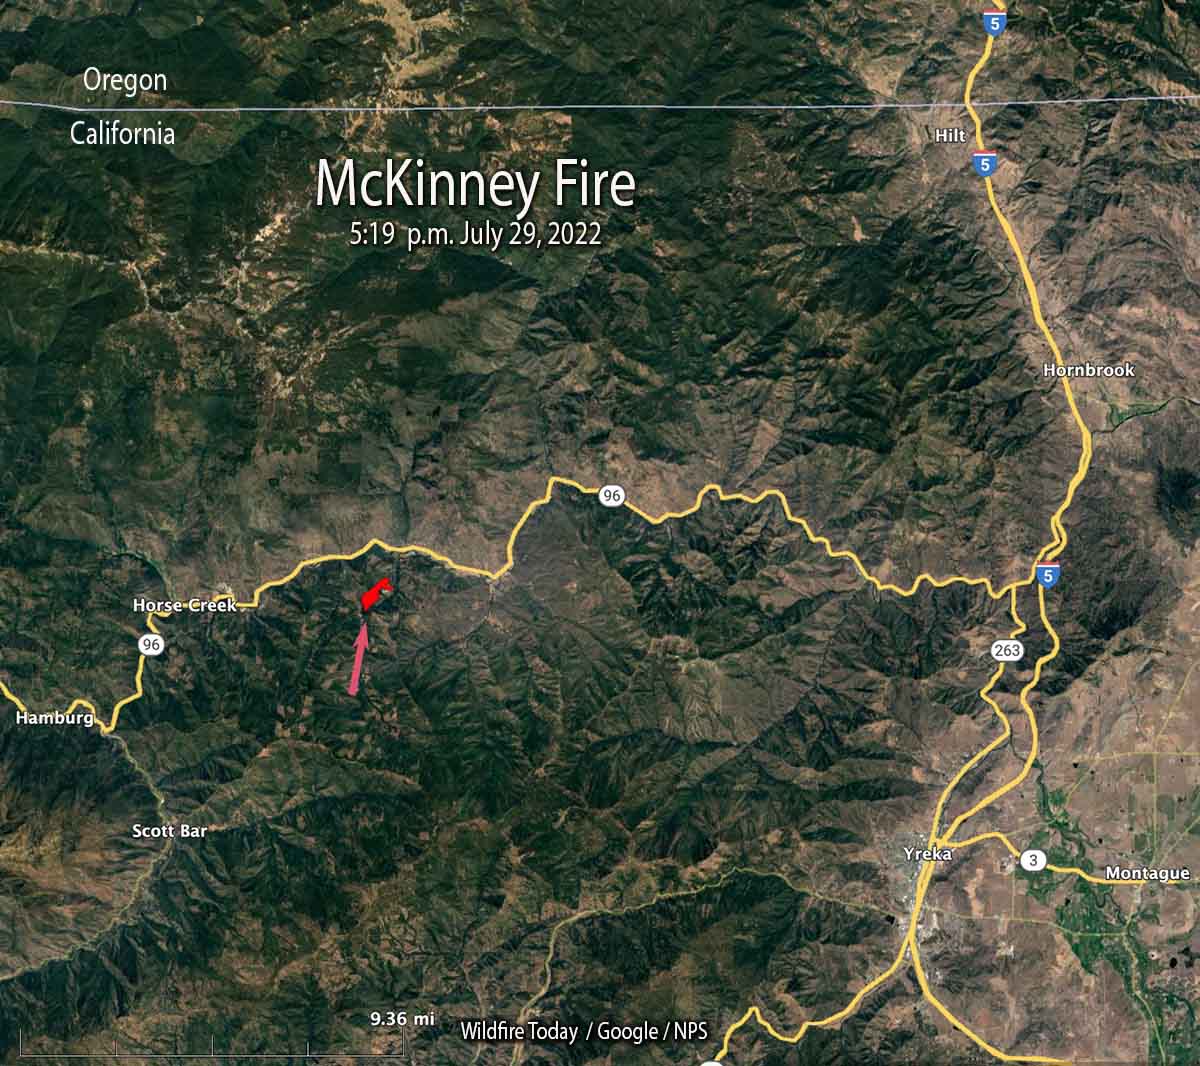 McKinney Fire location map 5:19 p.m July 29, 2022